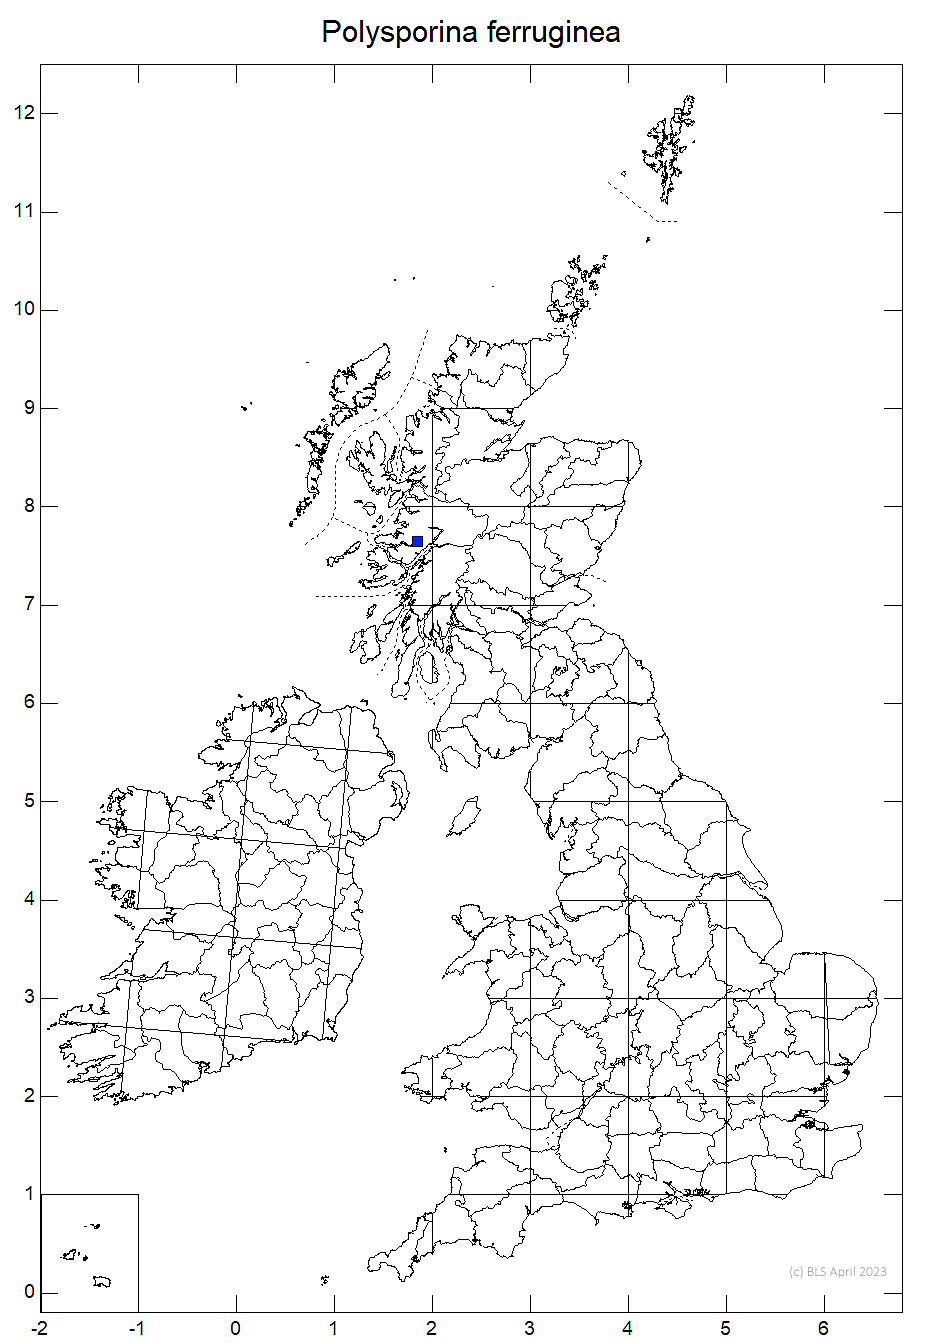 Polysporina ferruginea 10km sq distribution map